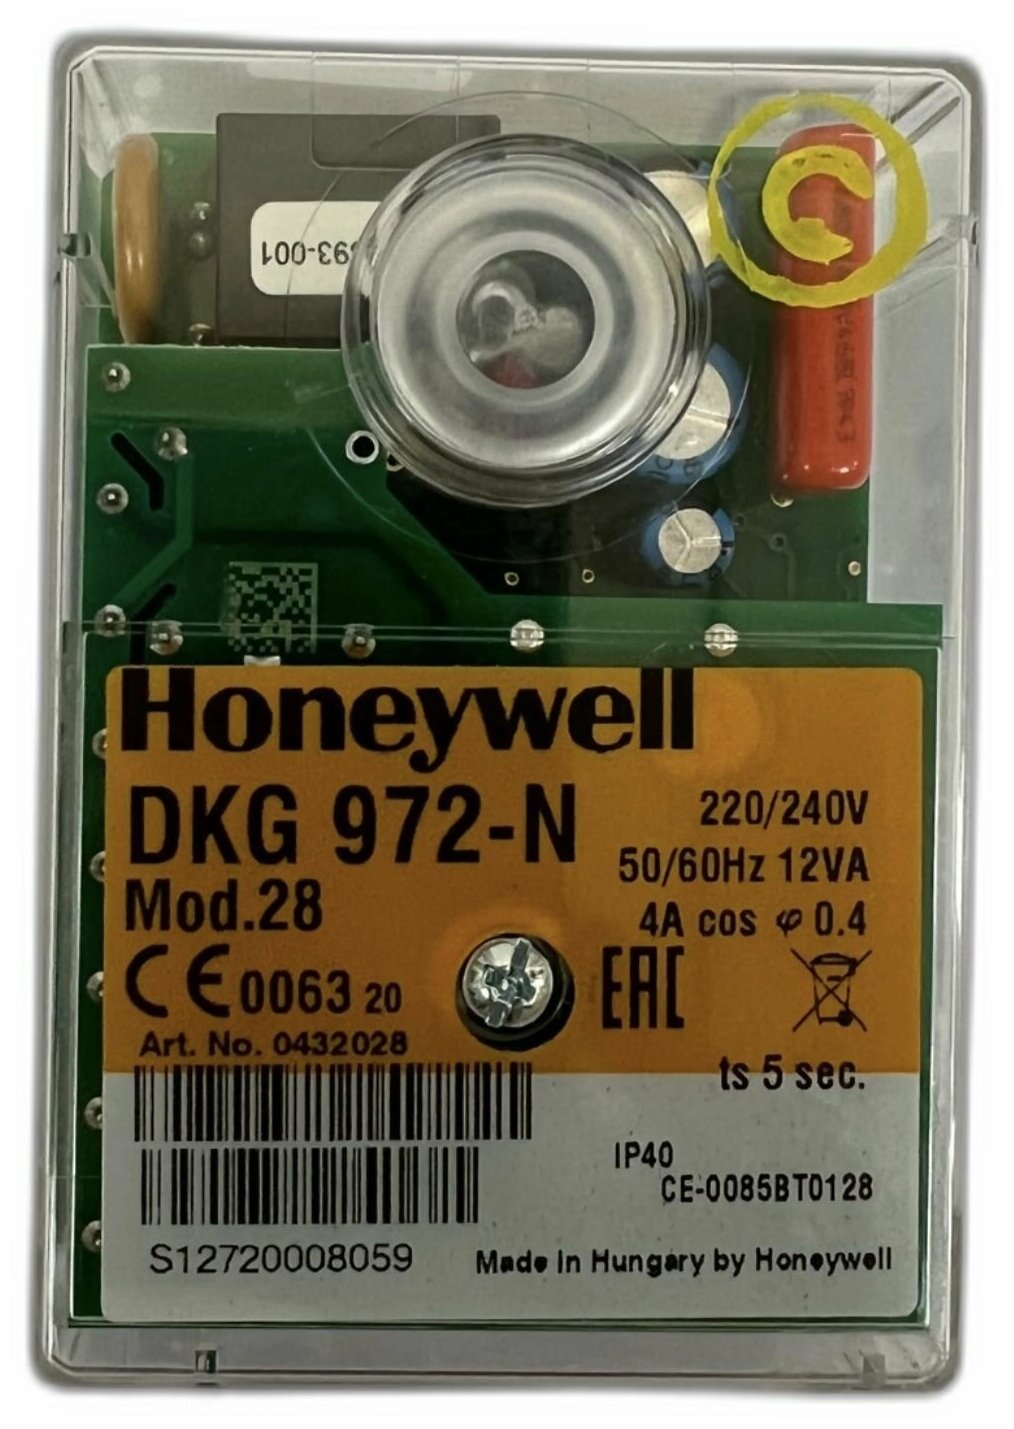 DKG972-N mod.28 Honeywell Блок управления горением / 0432028U, 537D8189 /